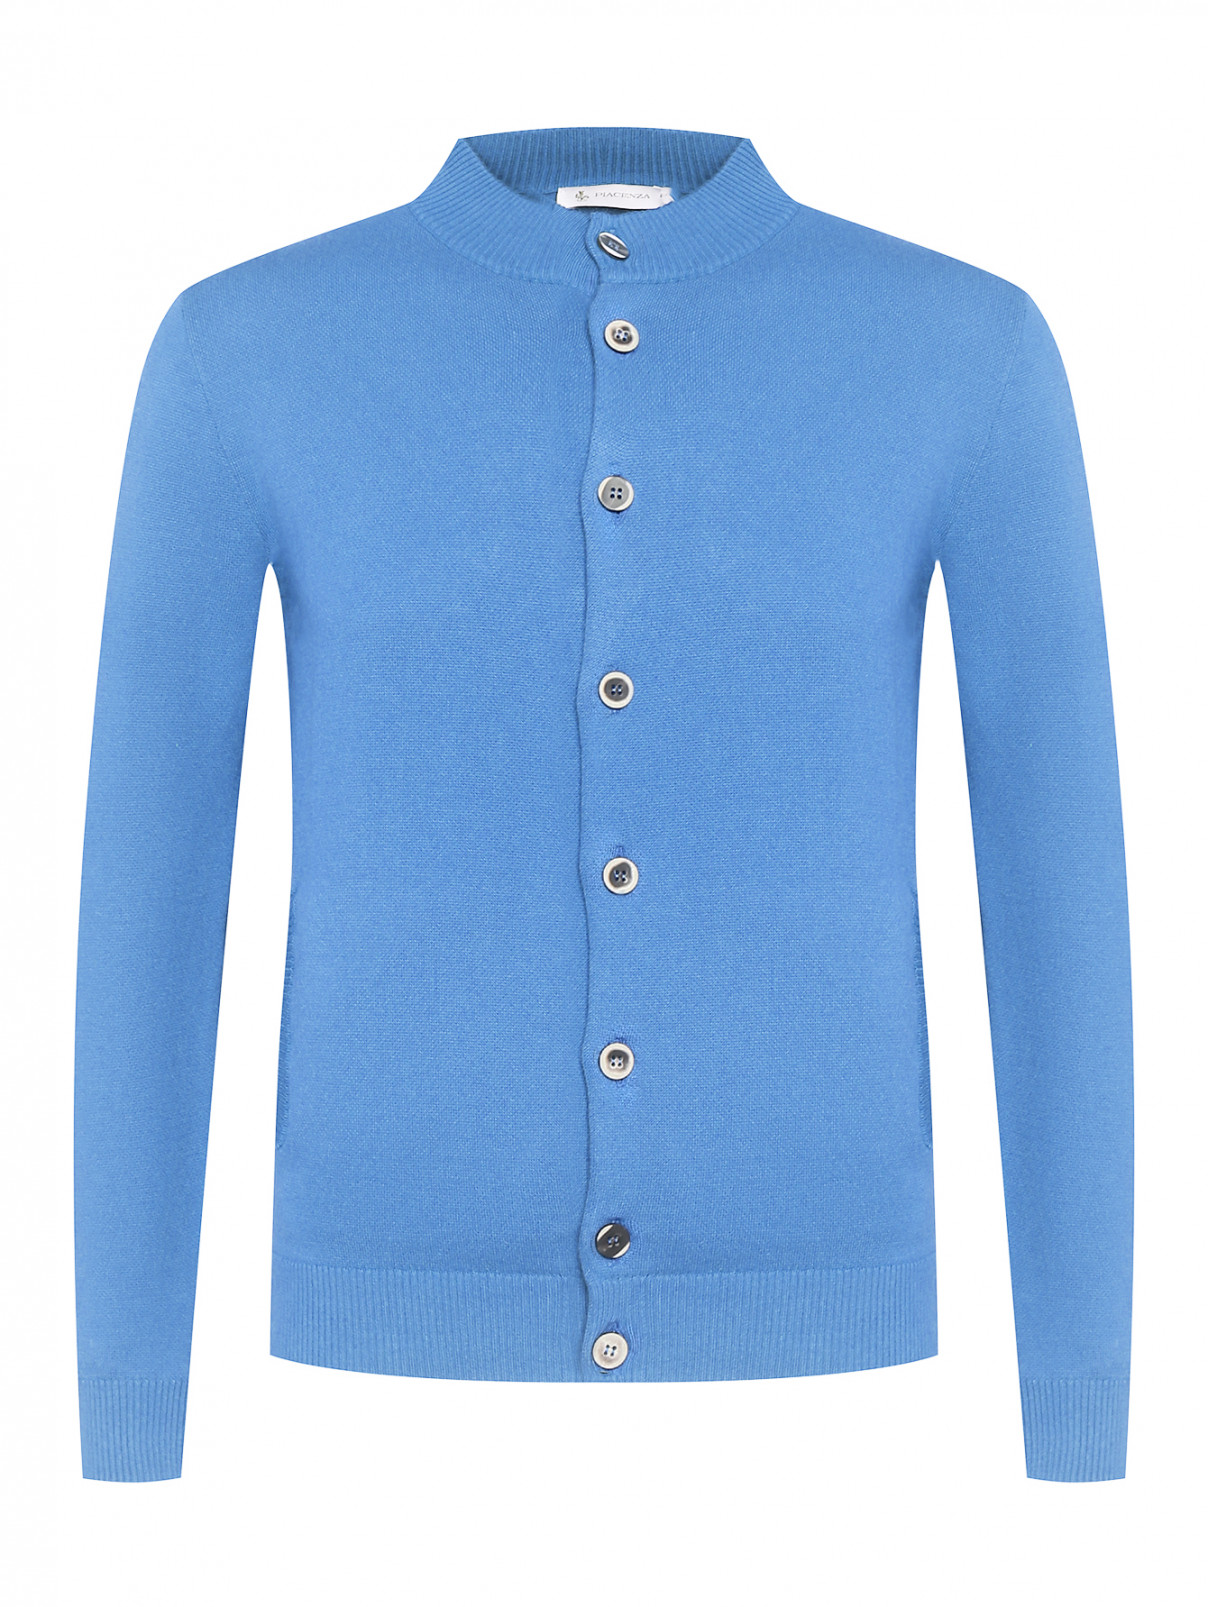 Кардиган на пуговицах с карманами Piacenza Cashmere  –  Общий вид  – Цвет:  Синий